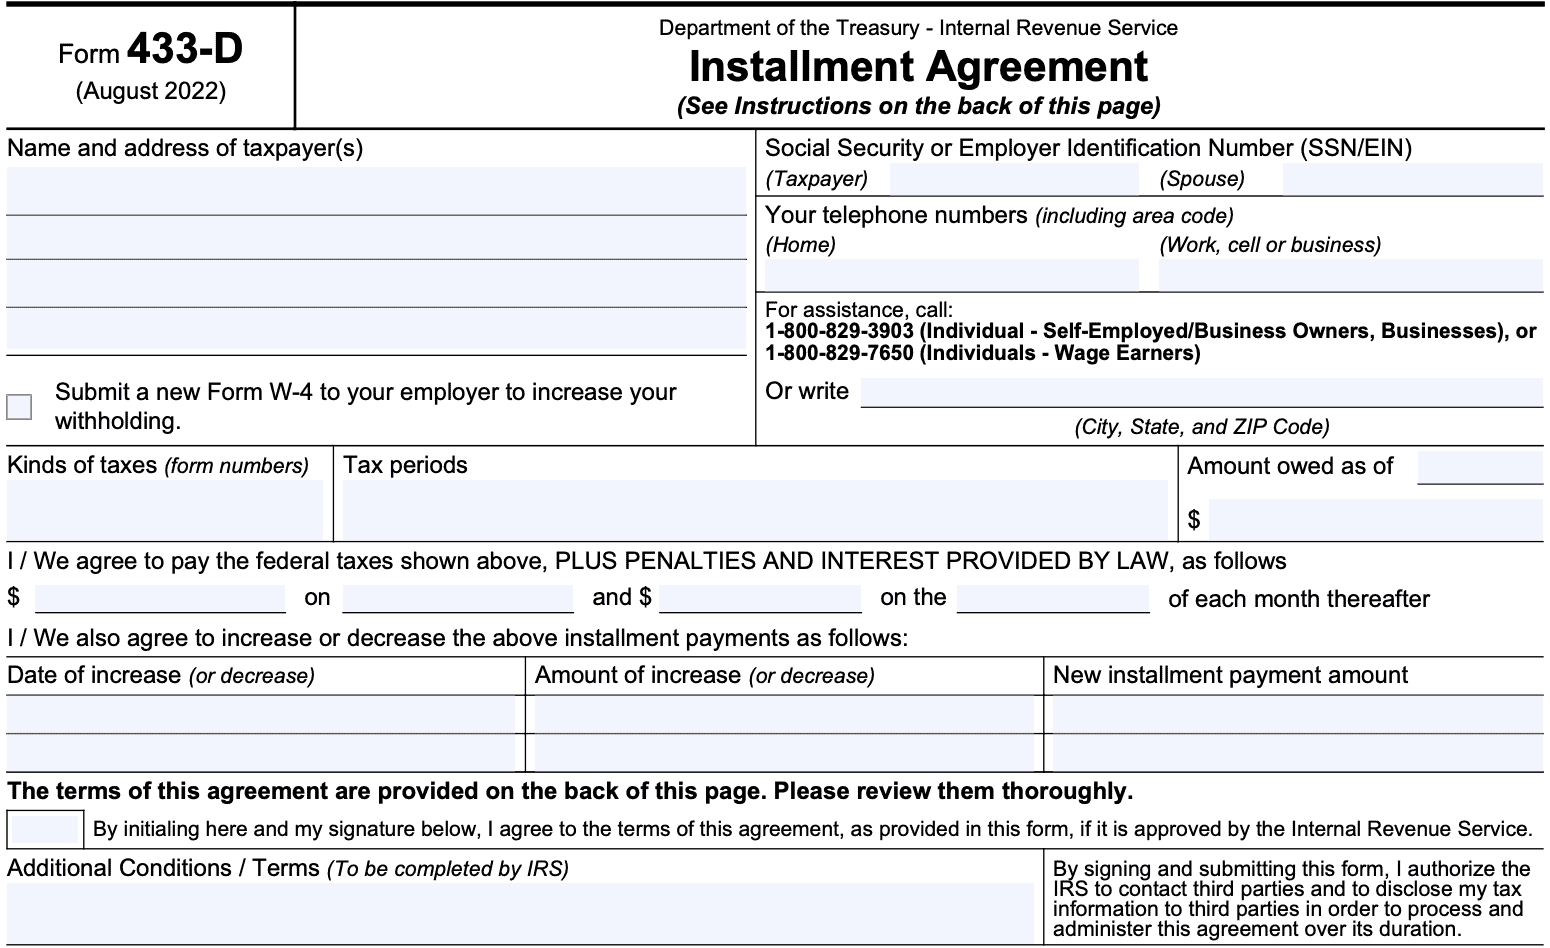 irs form 433-d, installment agreement form